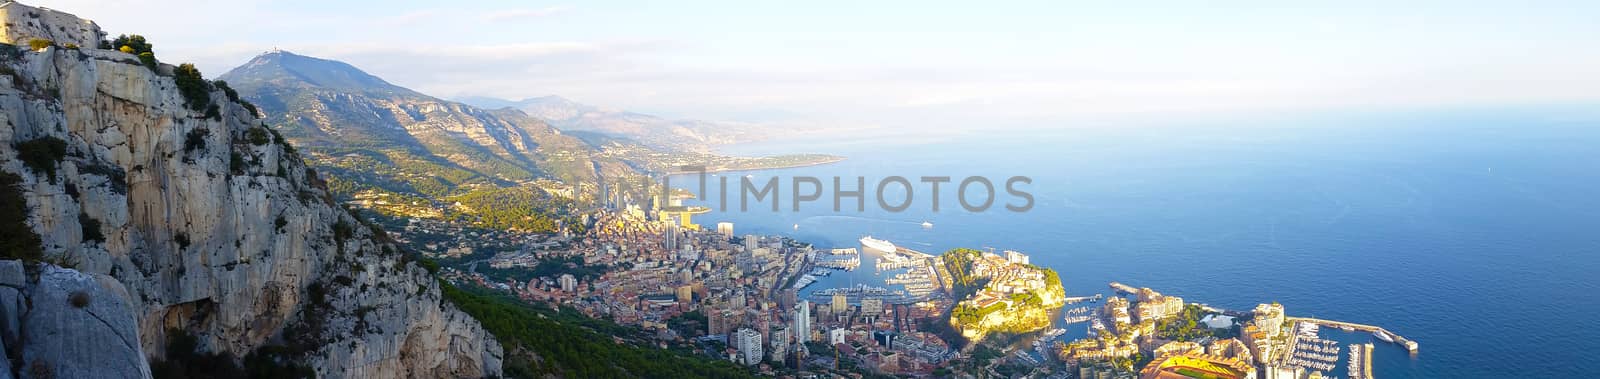 Panoramic View of the Principality of Monaco by bensib